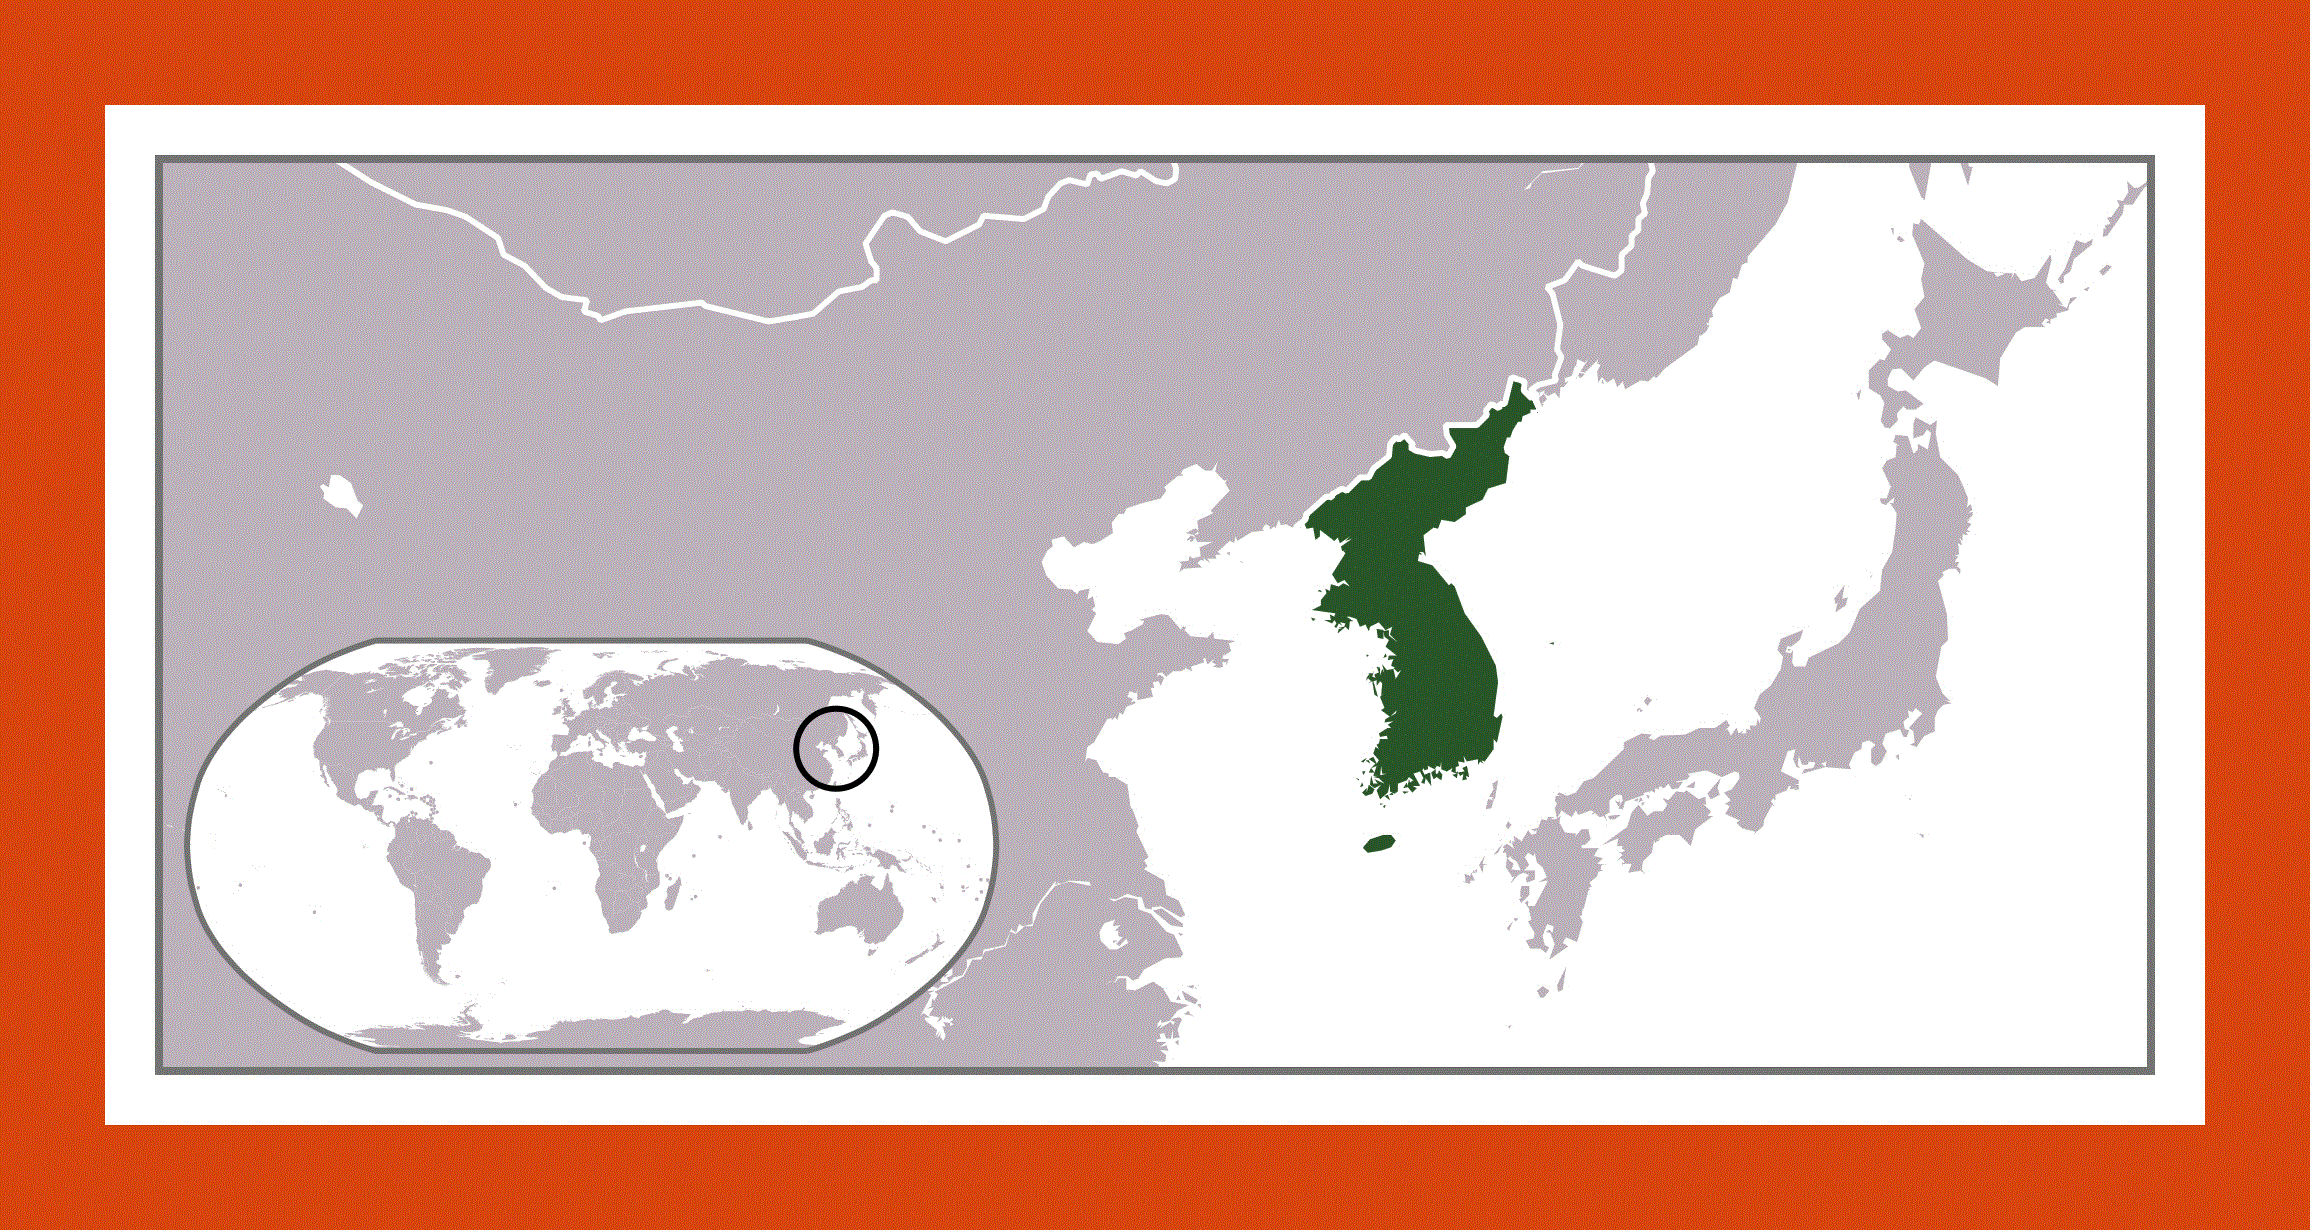 korean peninsula